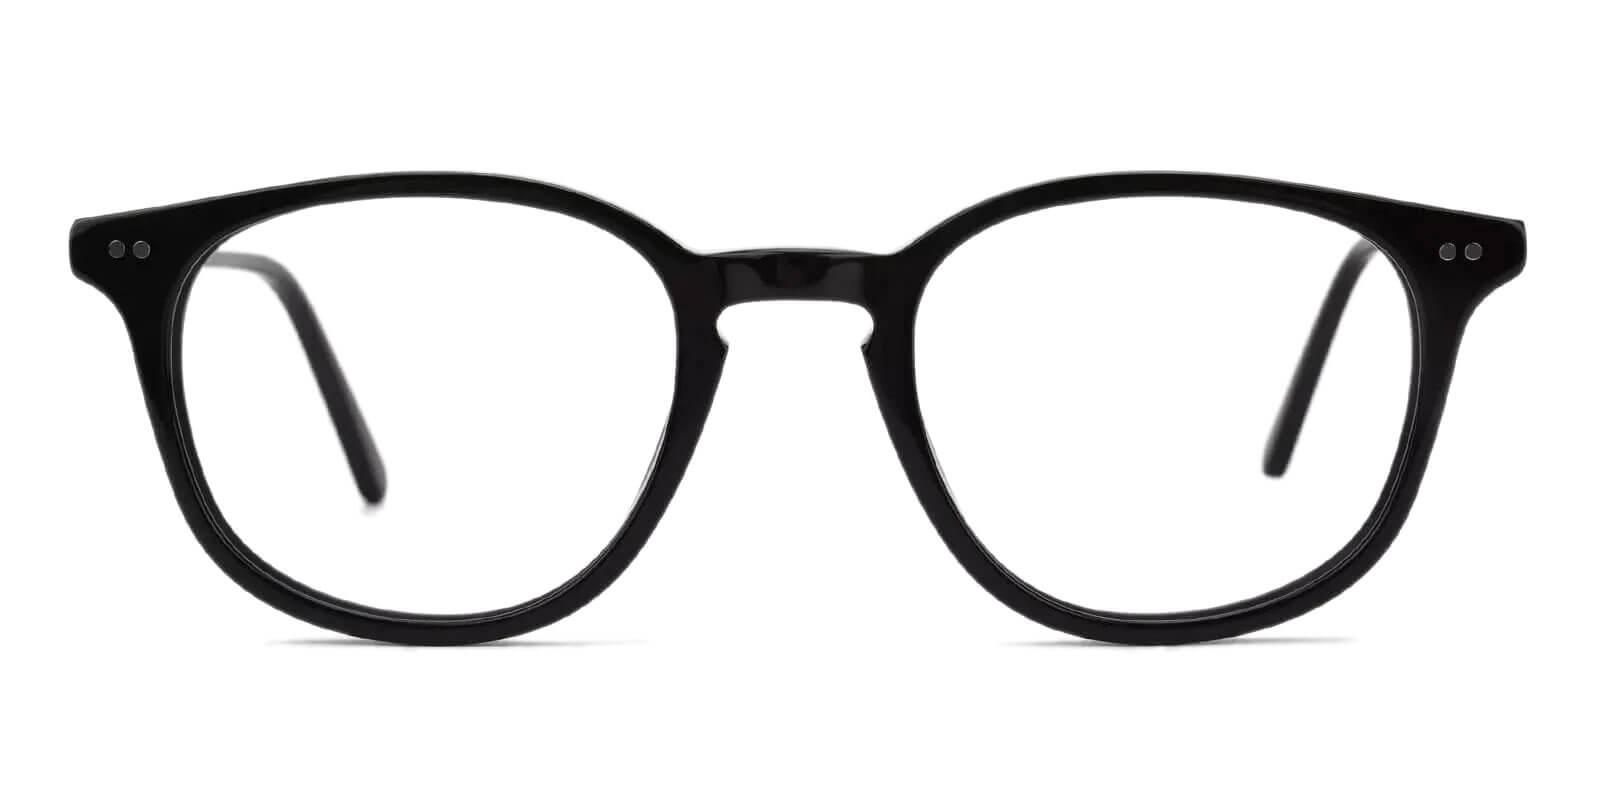 Venus Black Acetate Eyeglasses , UniversalBridgeFit Frames from ABBE Glasses